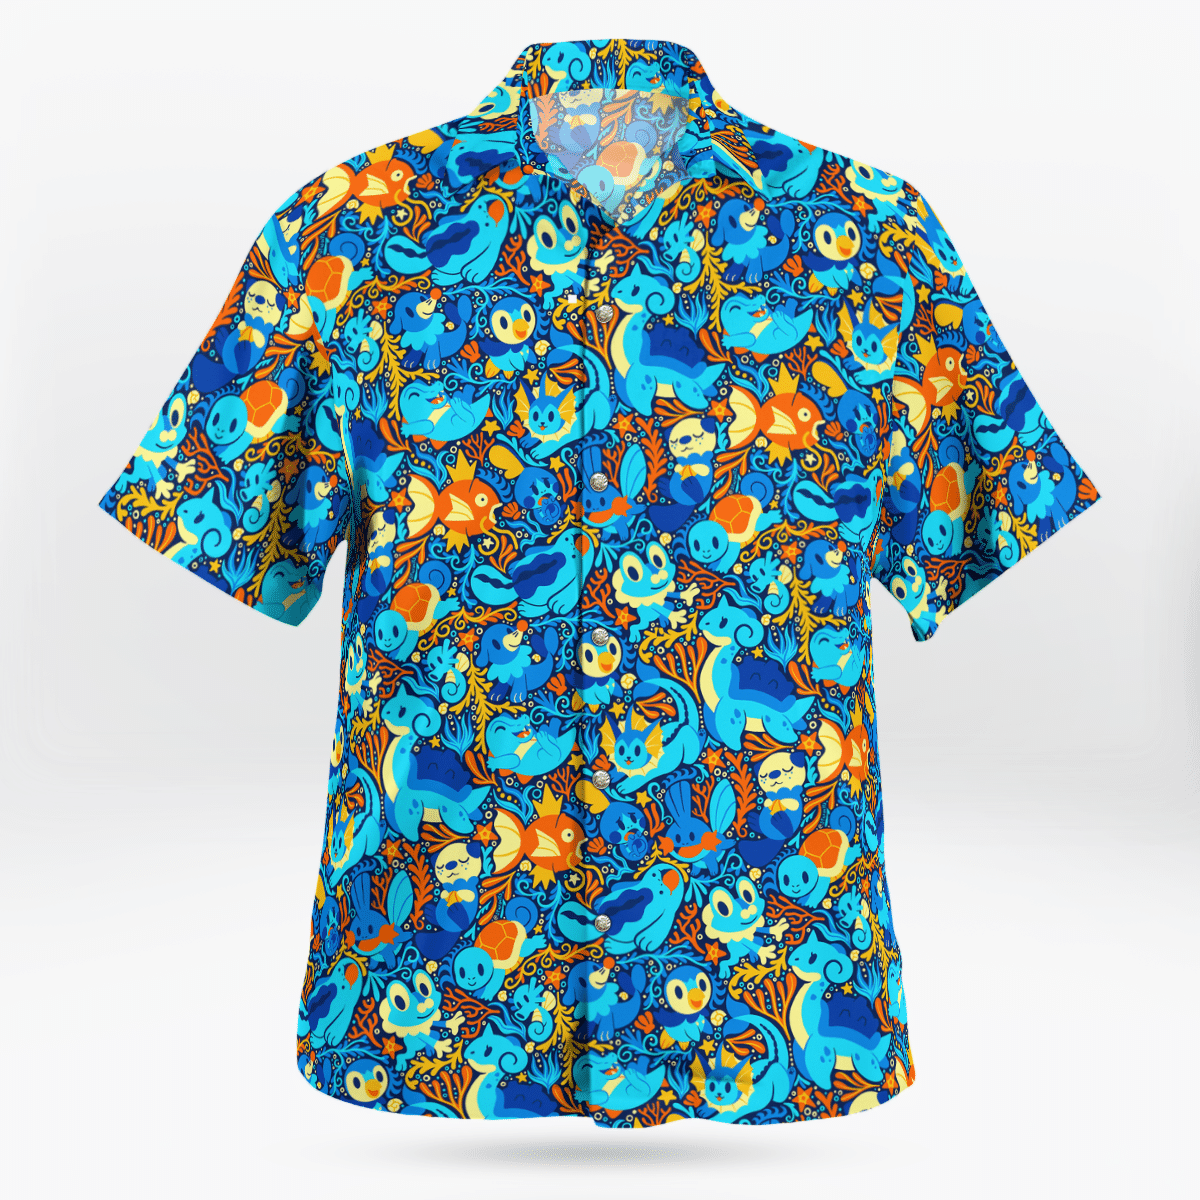 Water Pokemon Hawaiian shirt1